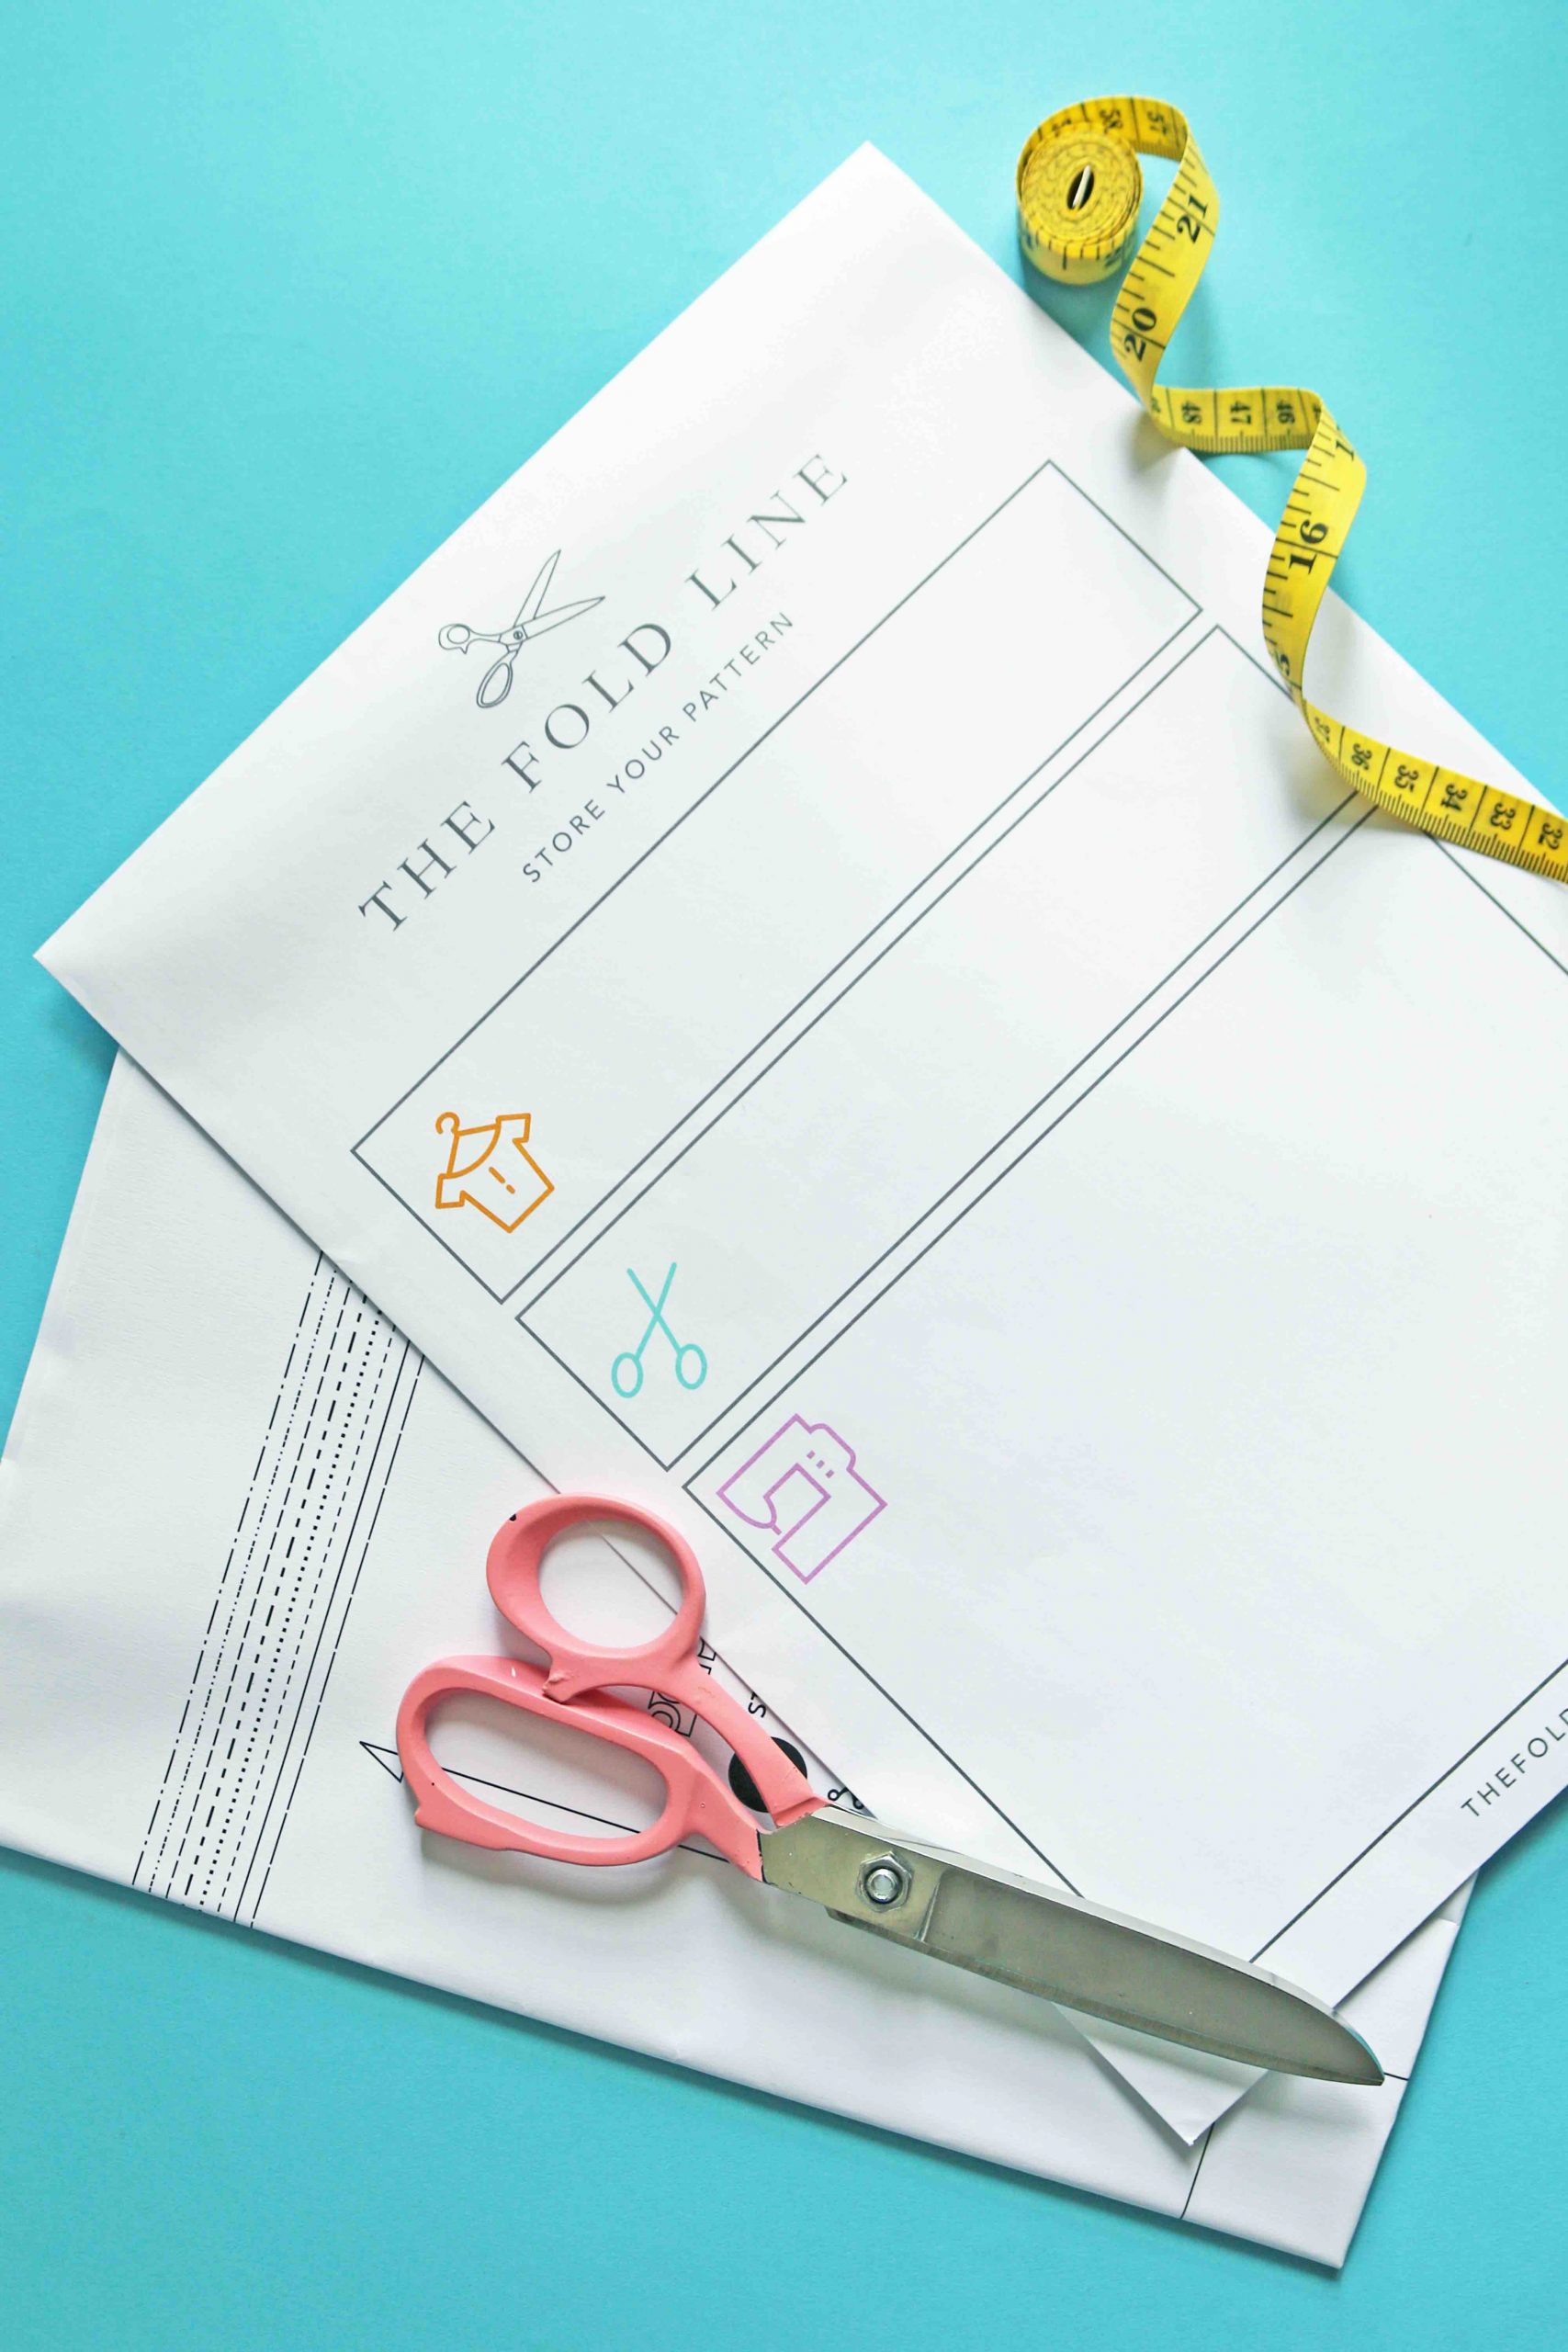 Sewing pattern storage envelopes - The Fold Line